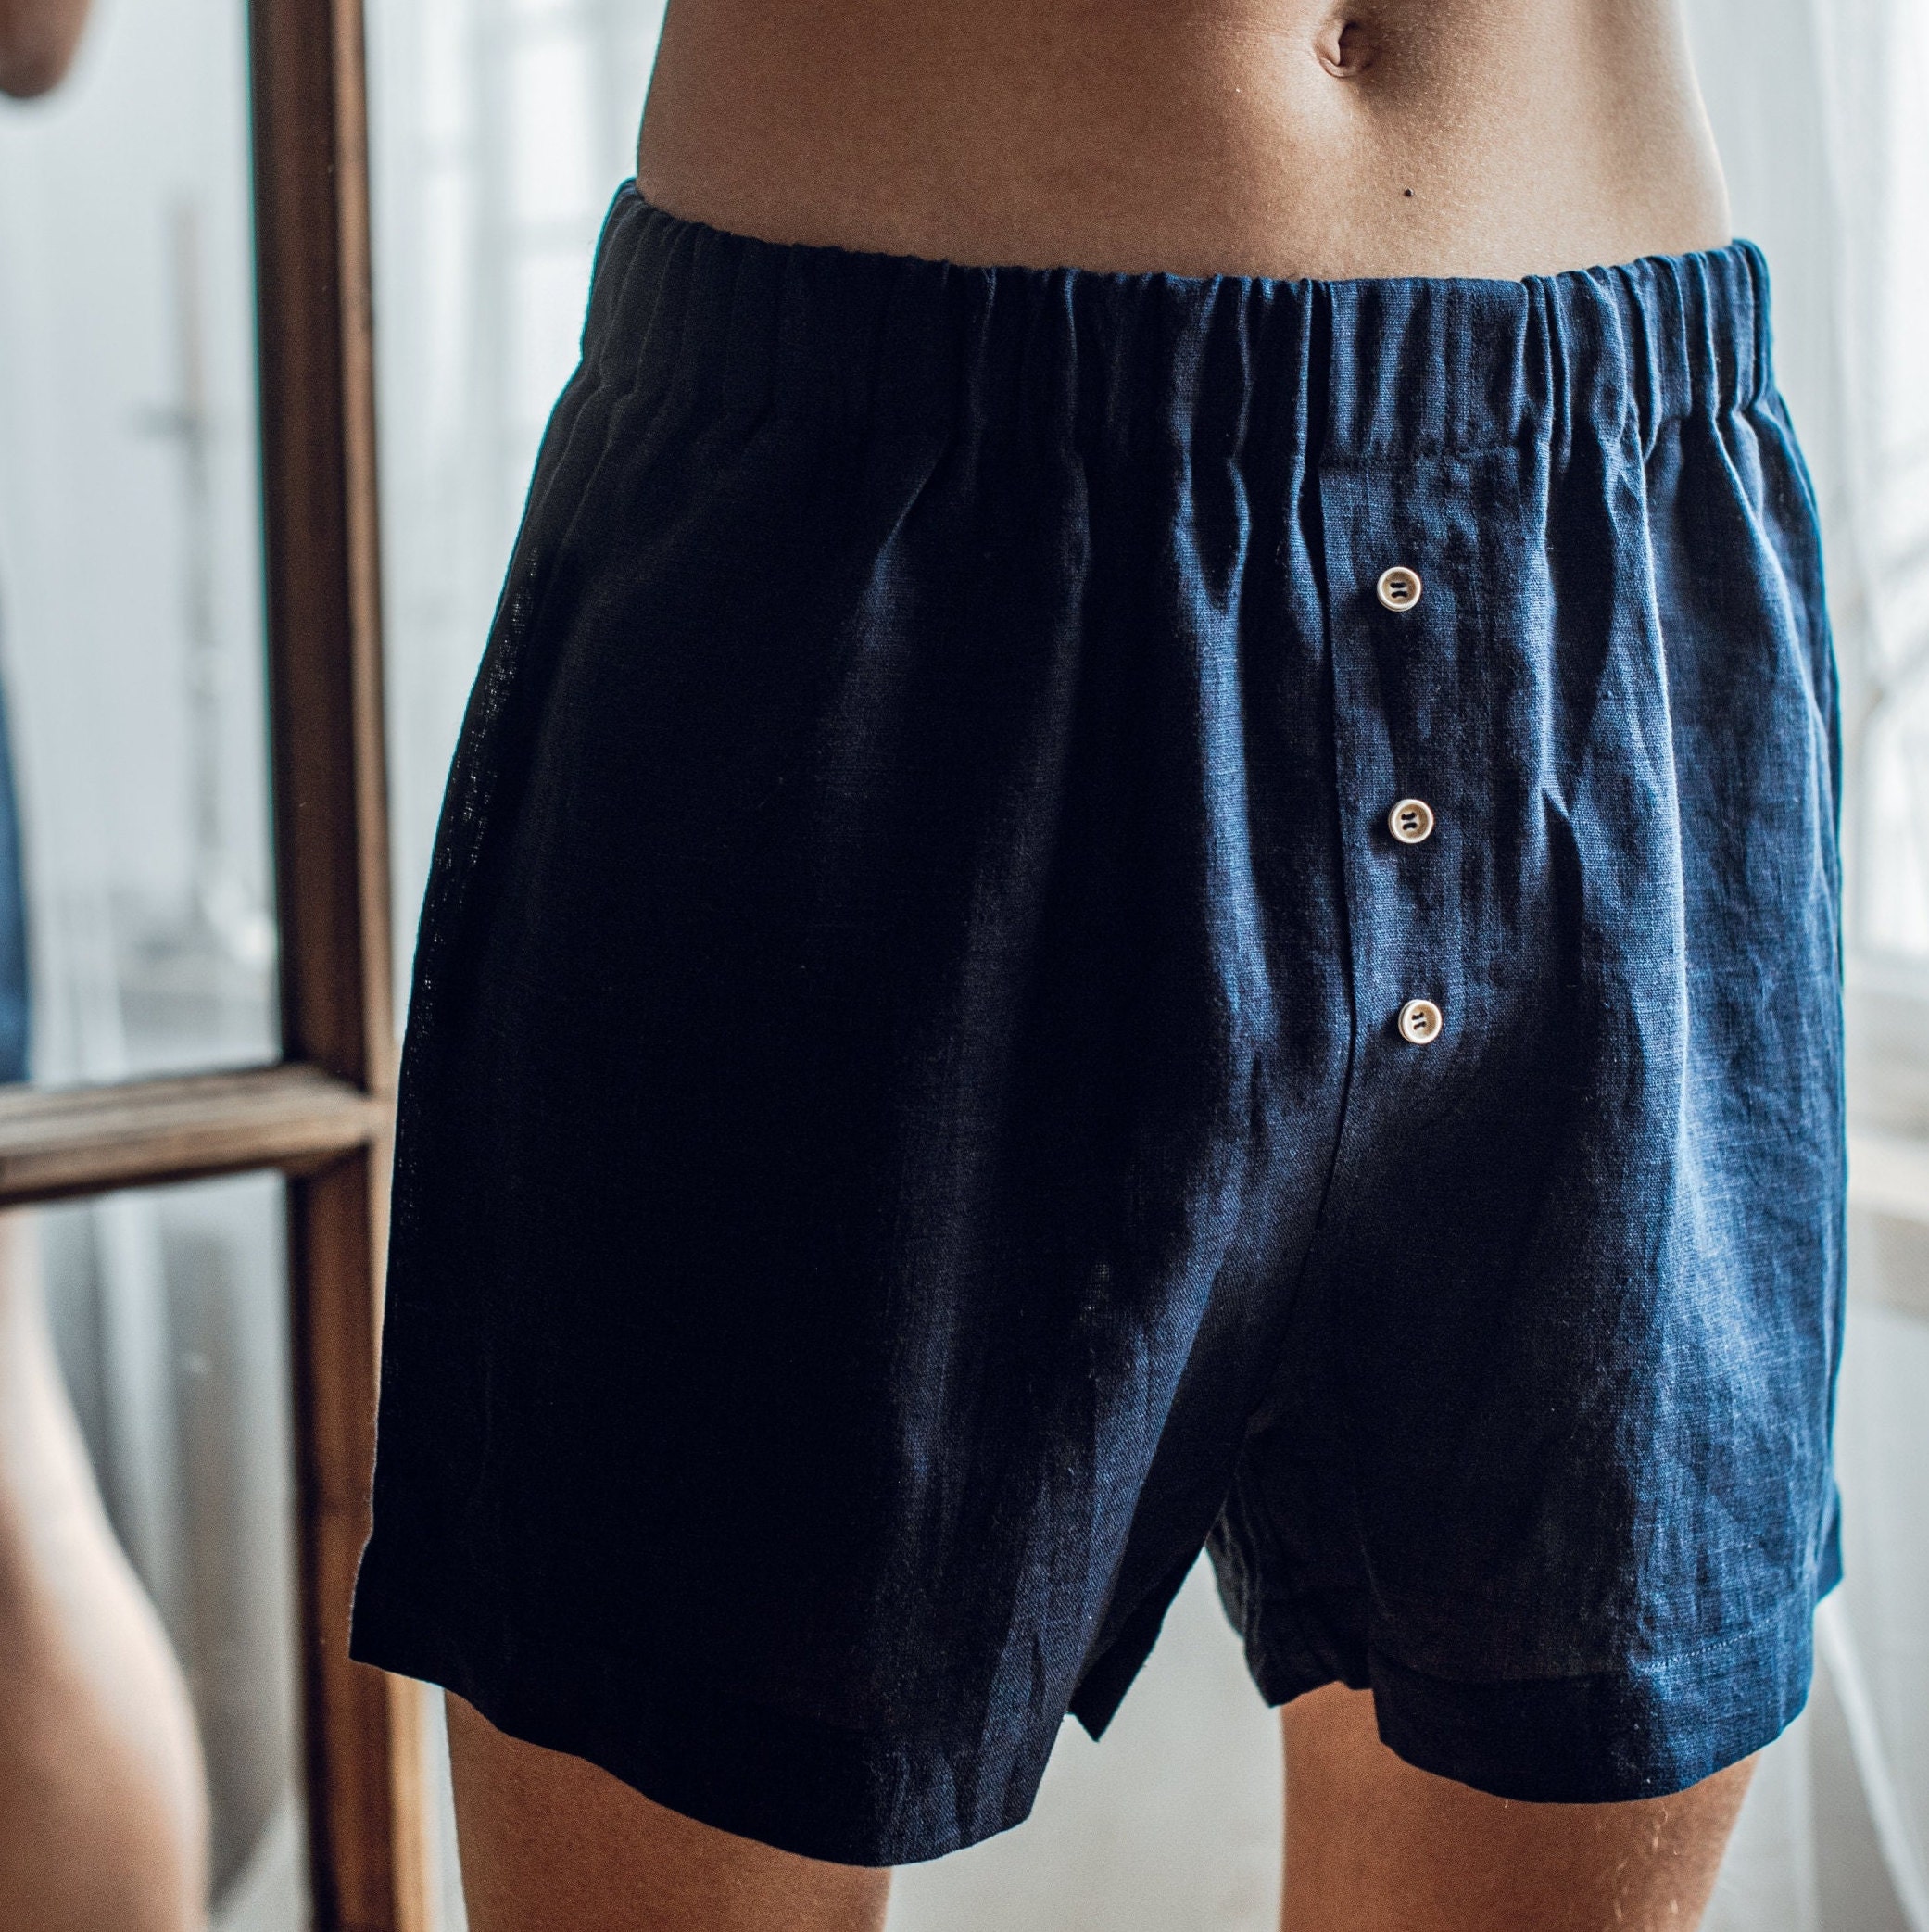 Men's Boxers Linen Sleep Shorts White Underpants for Men Organic Boxer  Briefs Underwear SET Gift for Boyfriend 